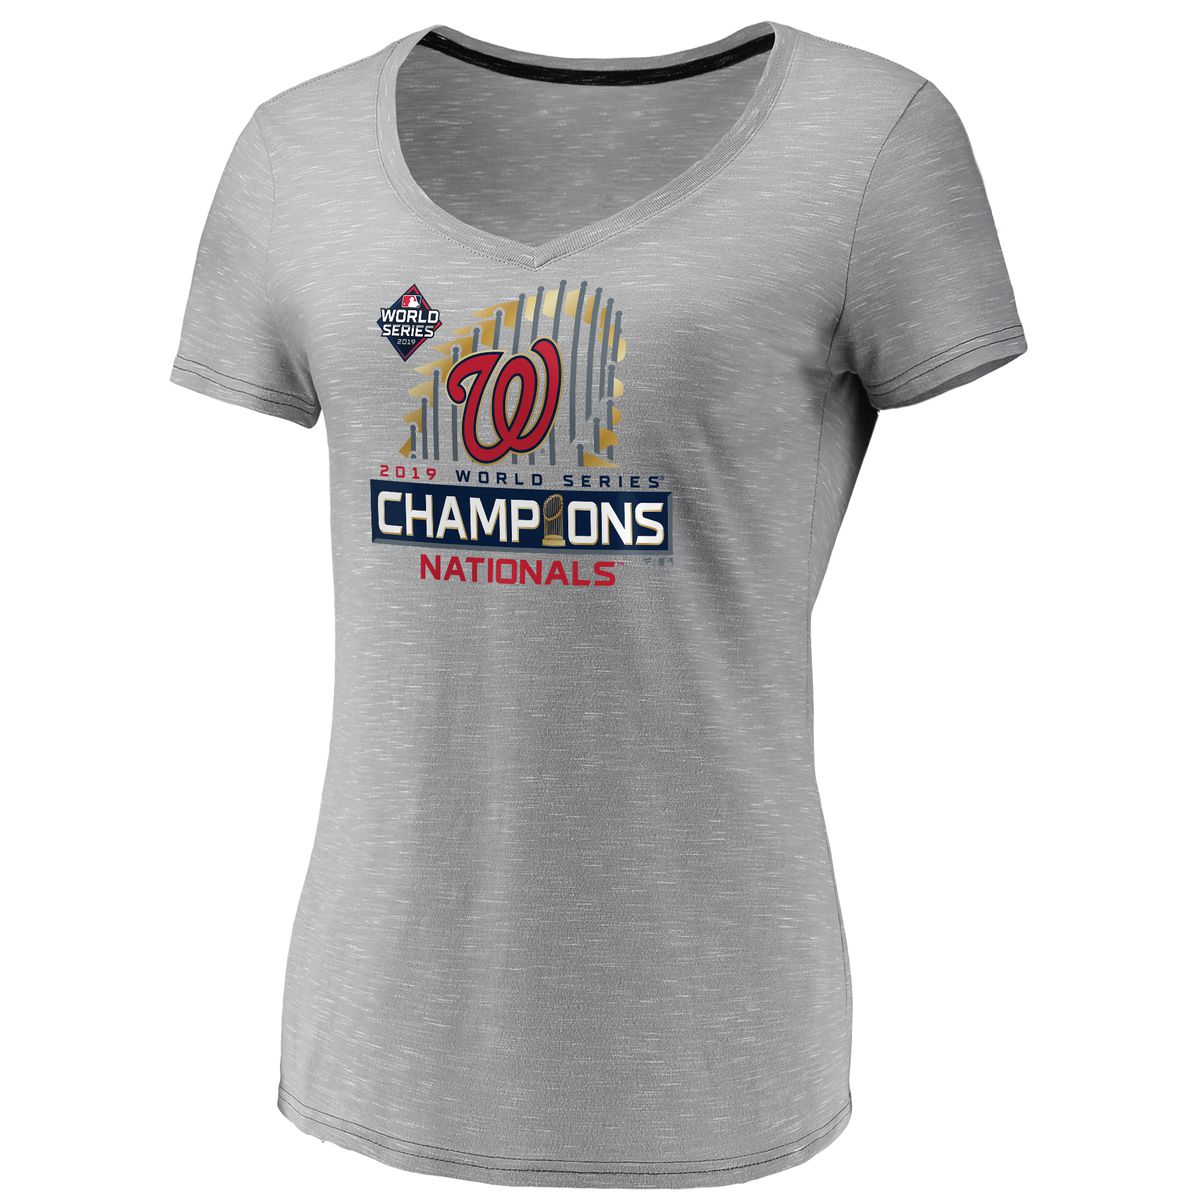 astros 2019 world series champions shirt